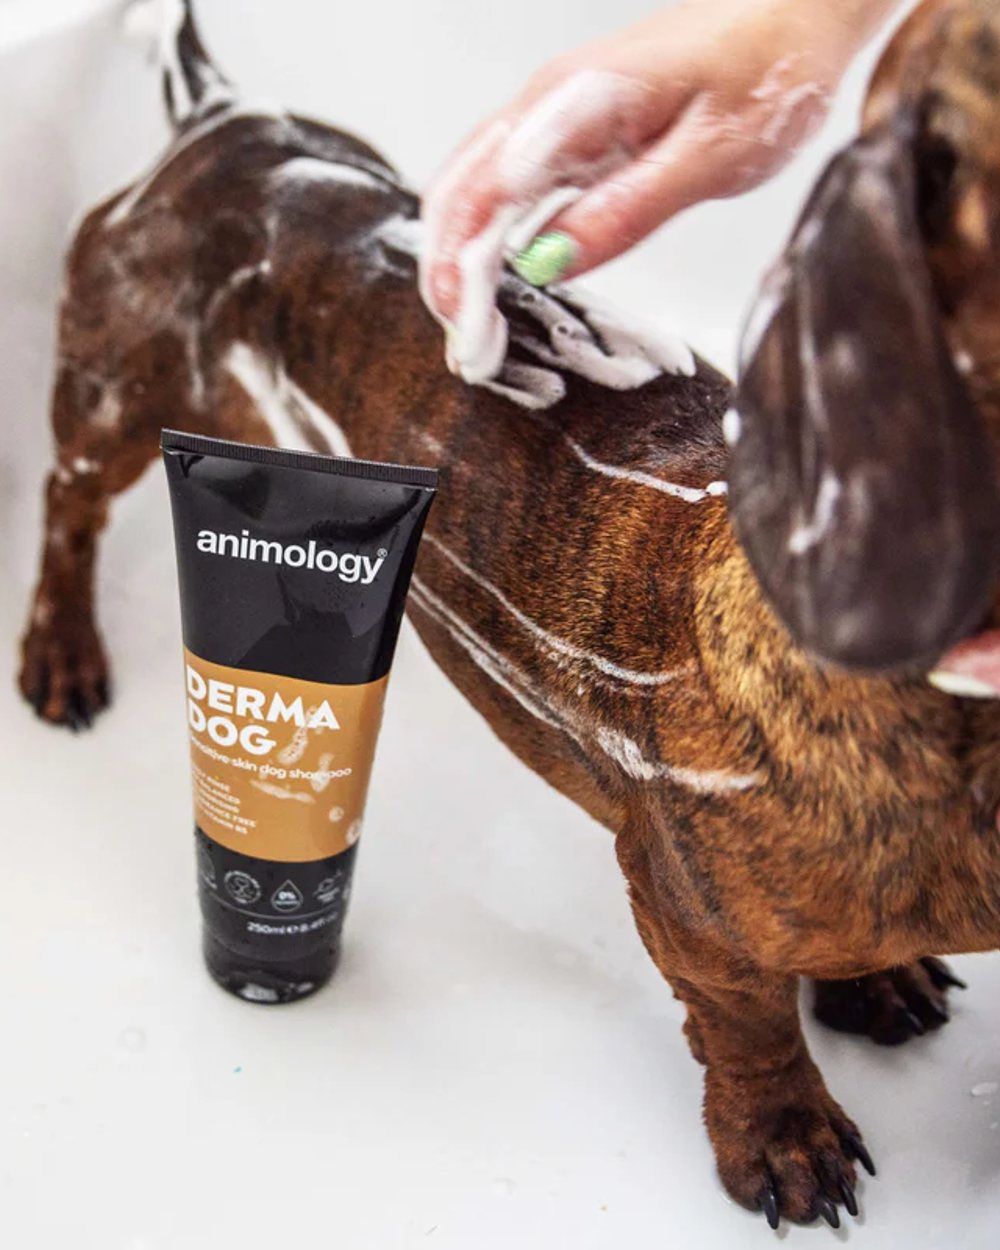 Animology Derma Dog Sensitive Skin Shampoo 250m with dog in background 